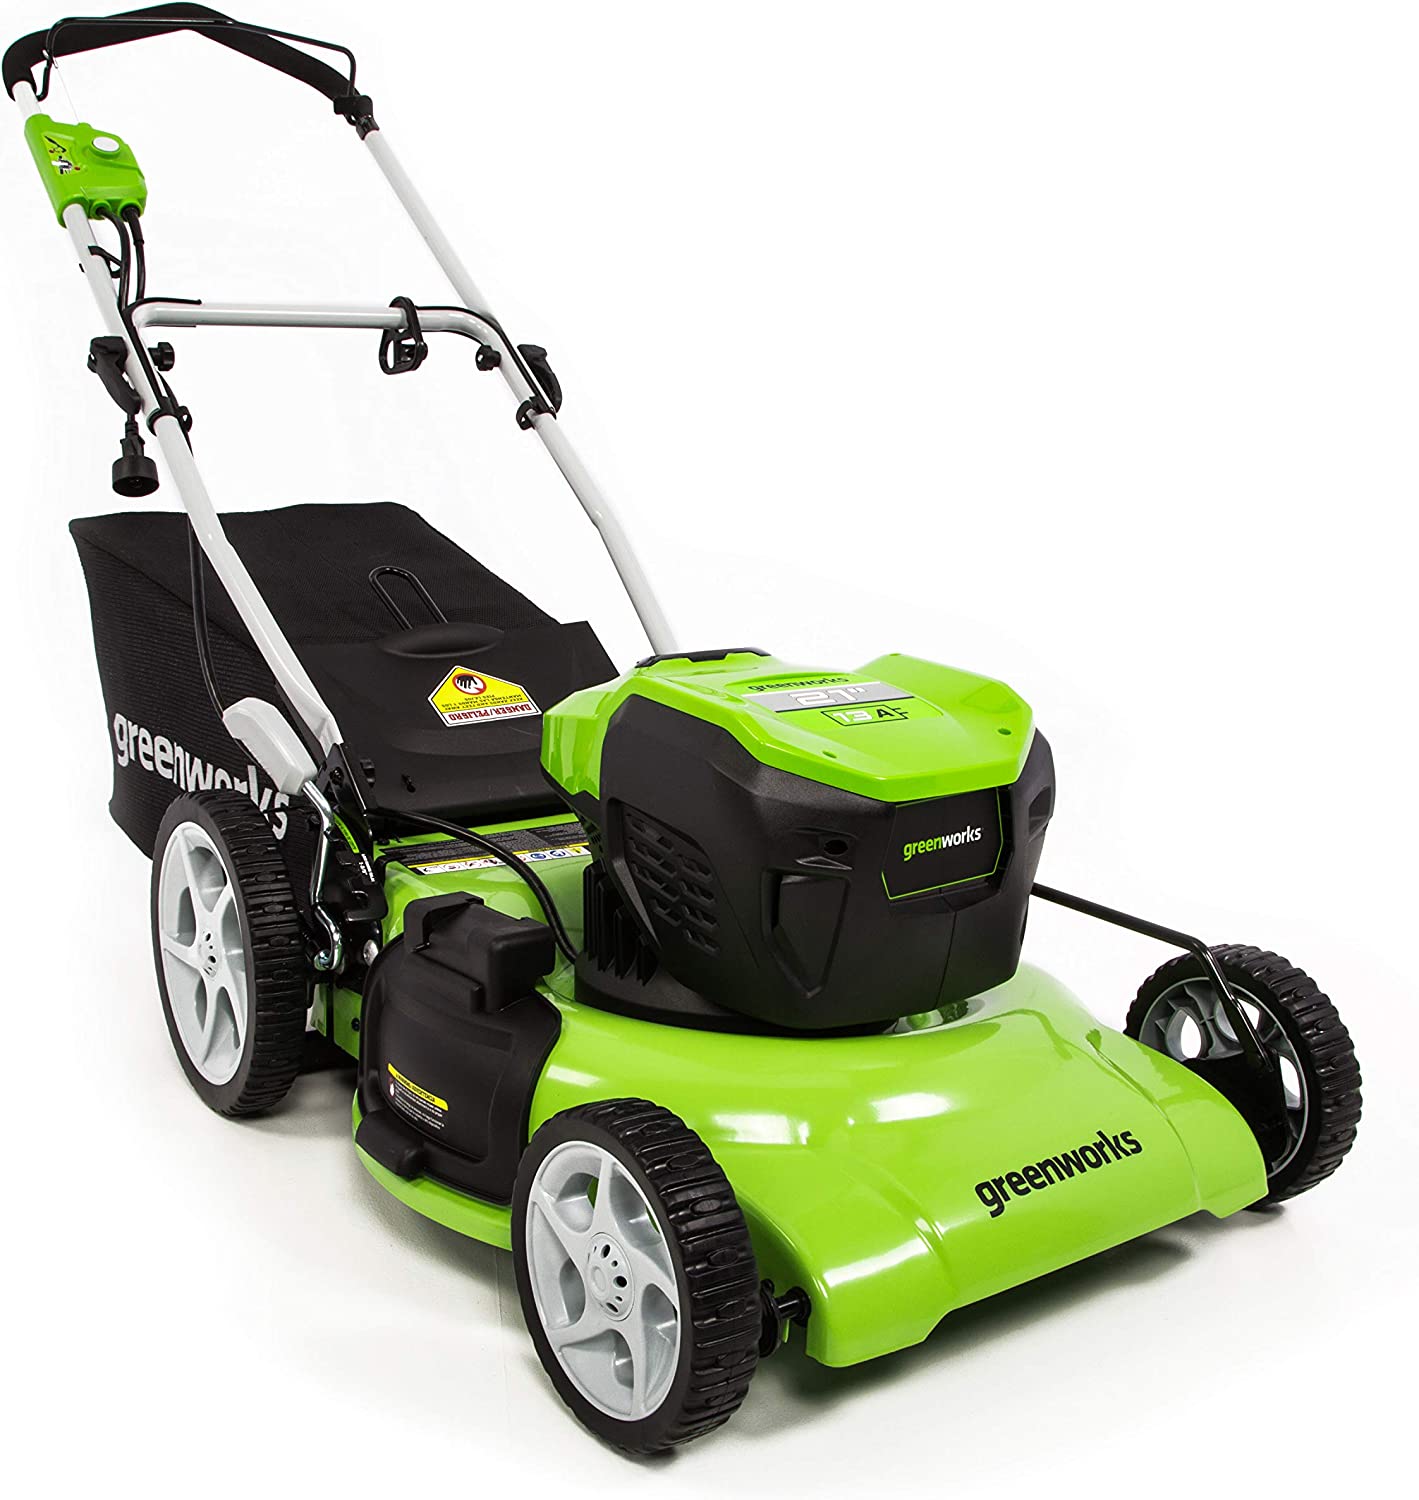 Greenworks: Best mulching lawn mower for small yard